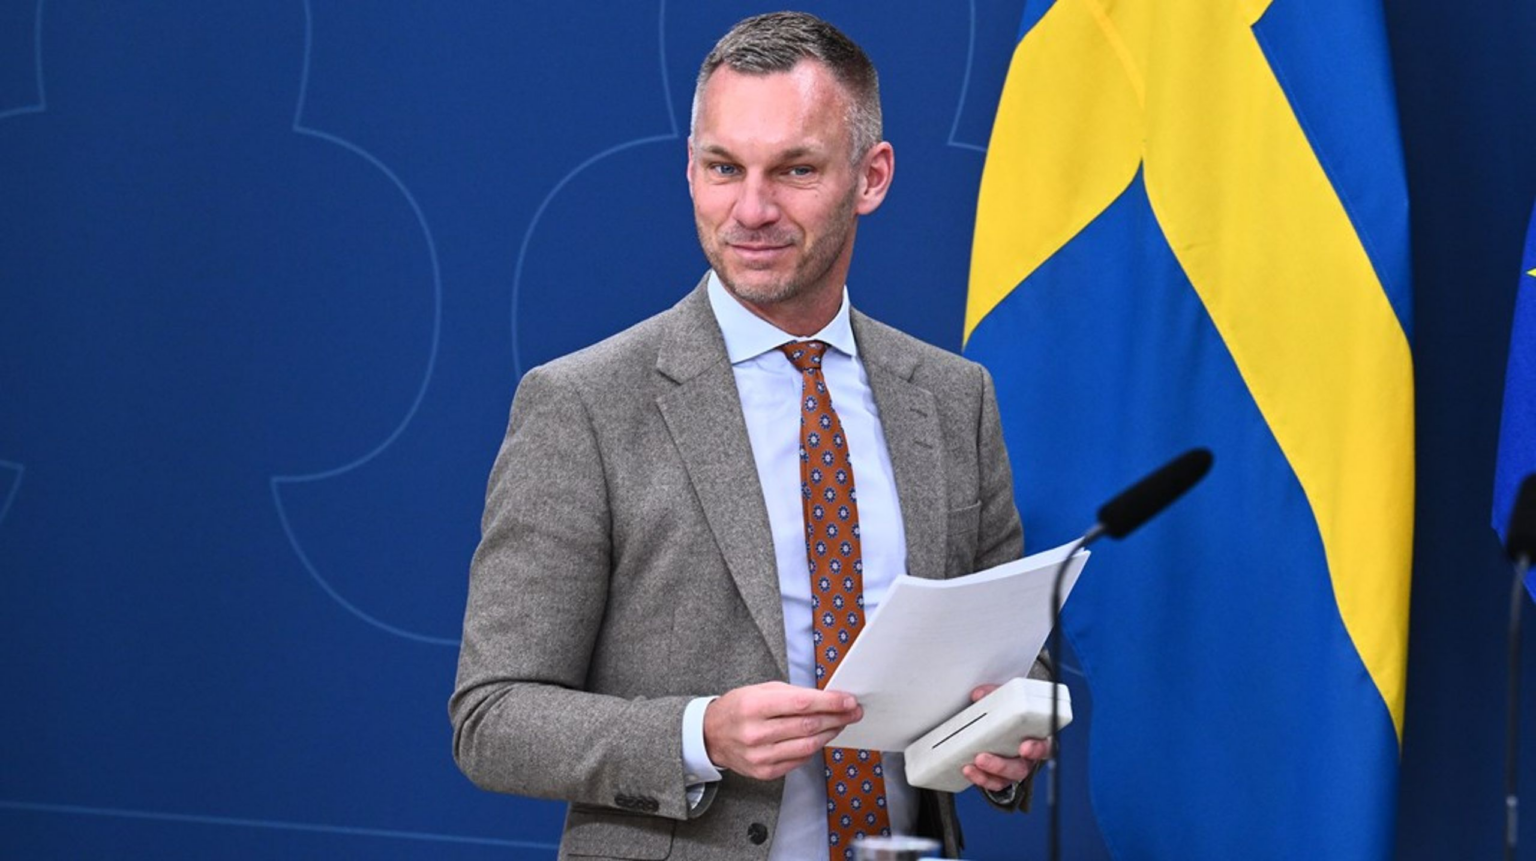 Civilministern Erik Slottner Avslöjar Sitt Eget Digitala Utanförskap